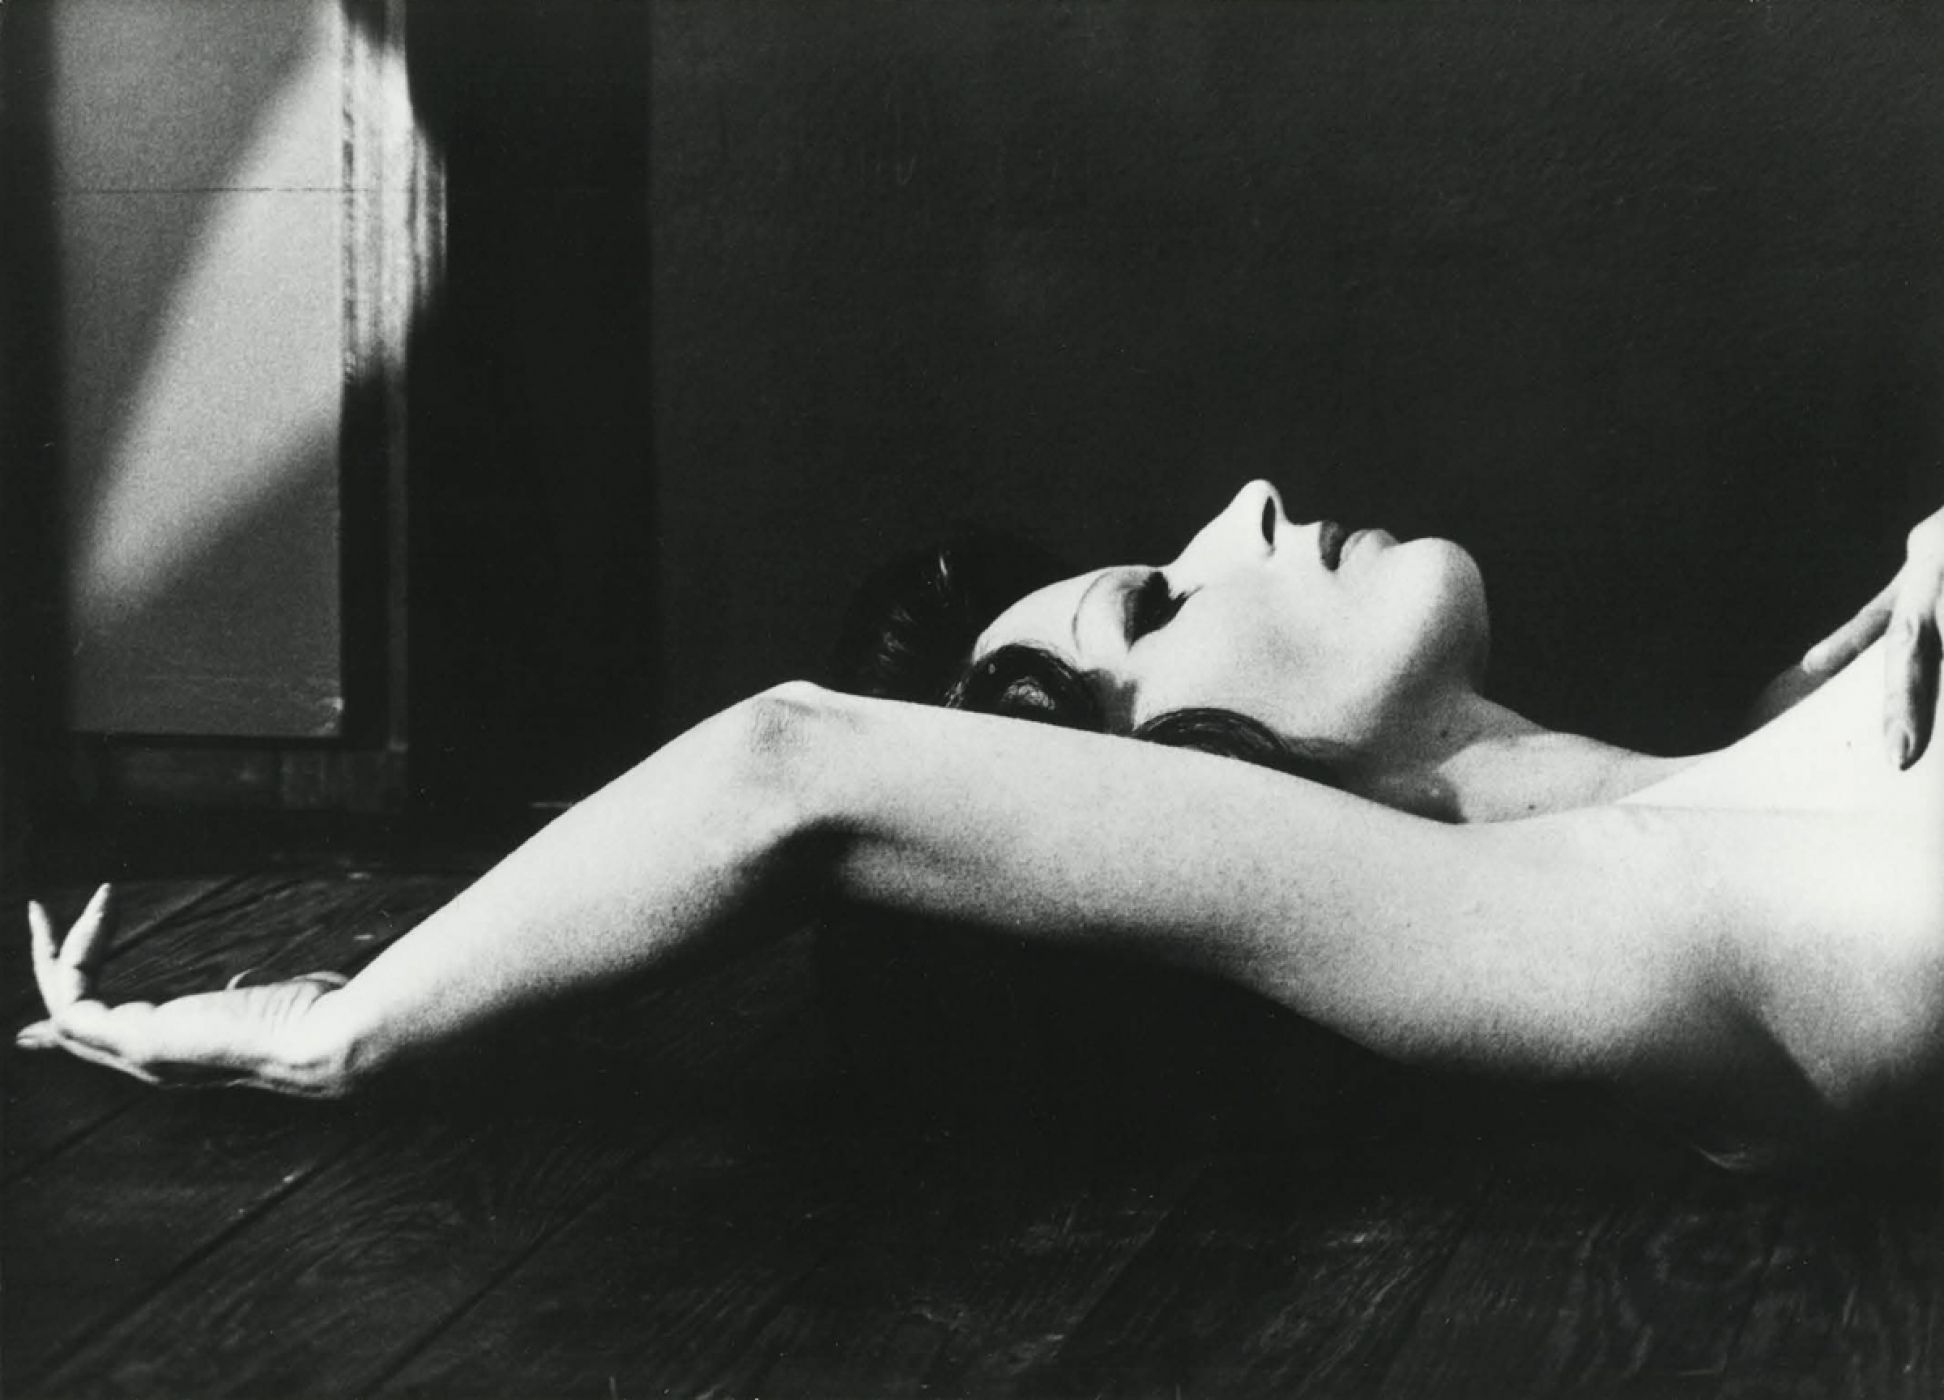 Angelo Novi, “Silvana Mangano in “Teorema" by Pier Paolo Pasolini”, 1967